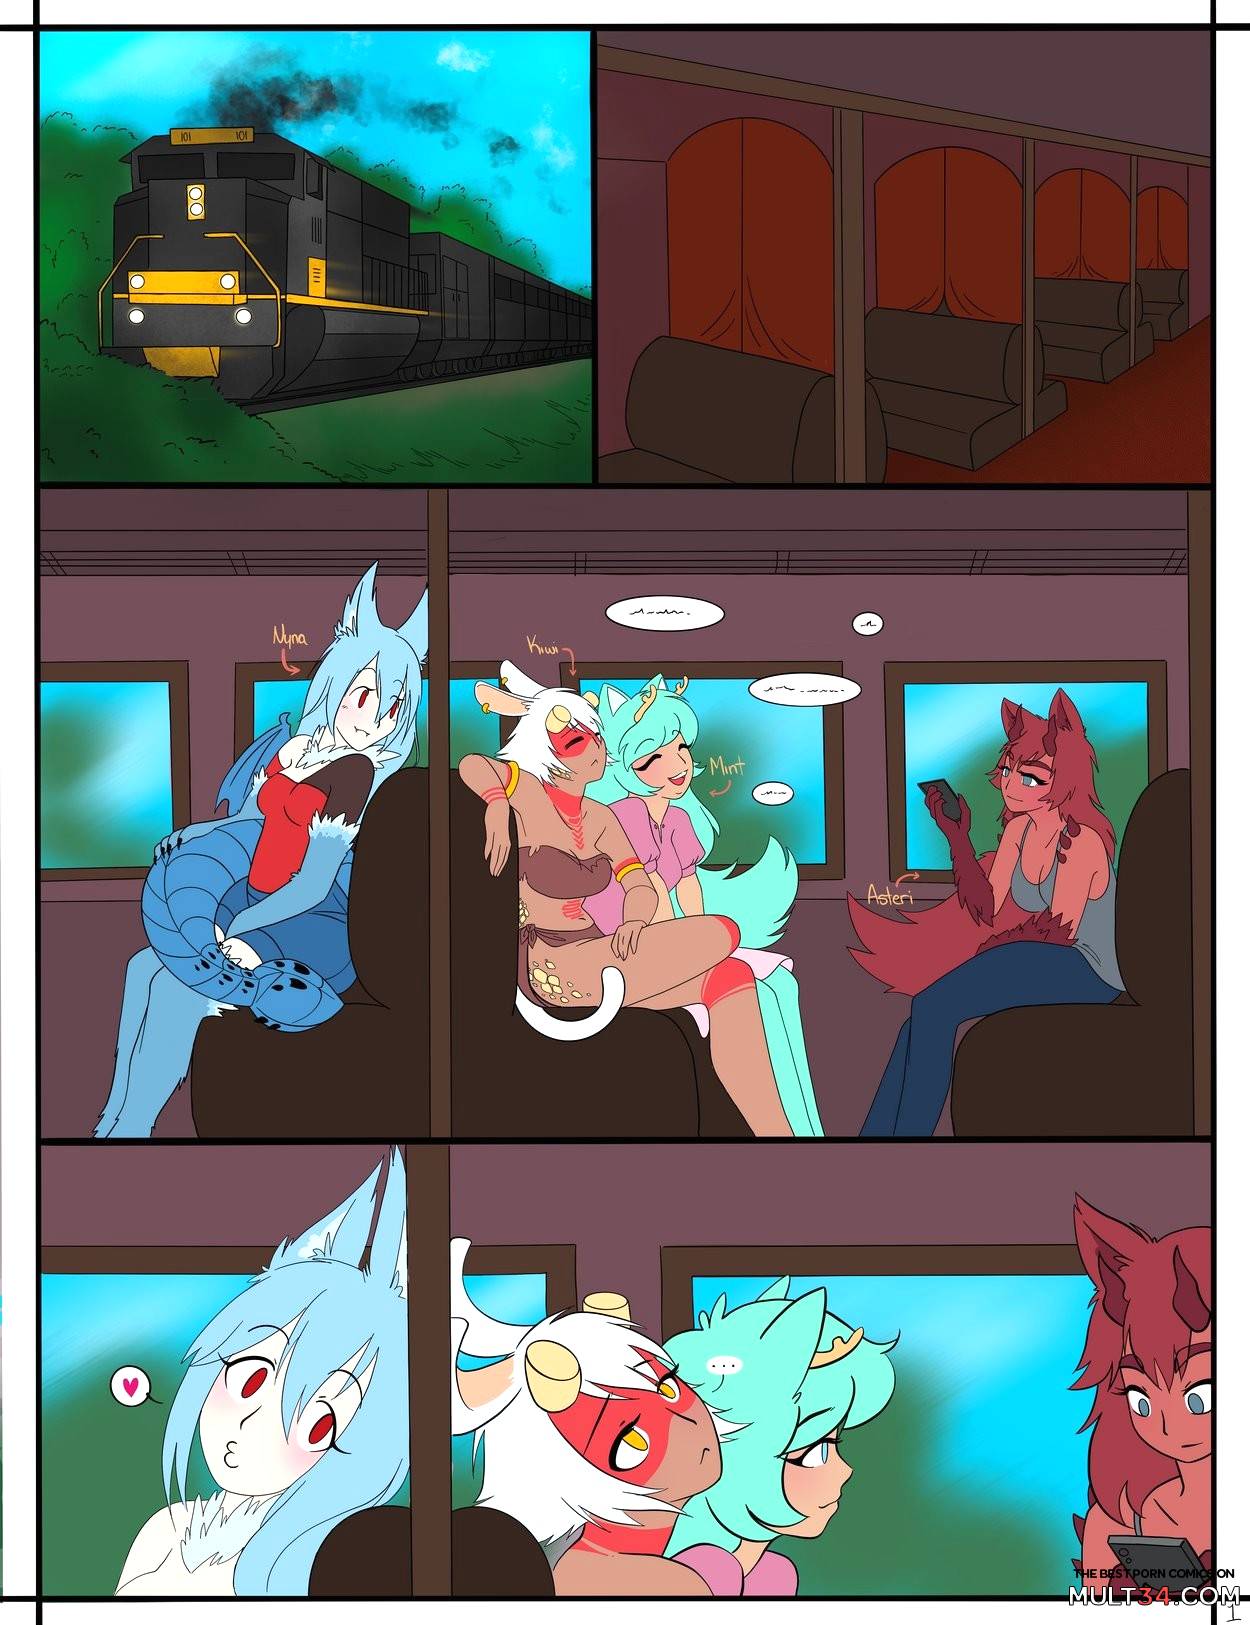 Nyna's train adventure page 1